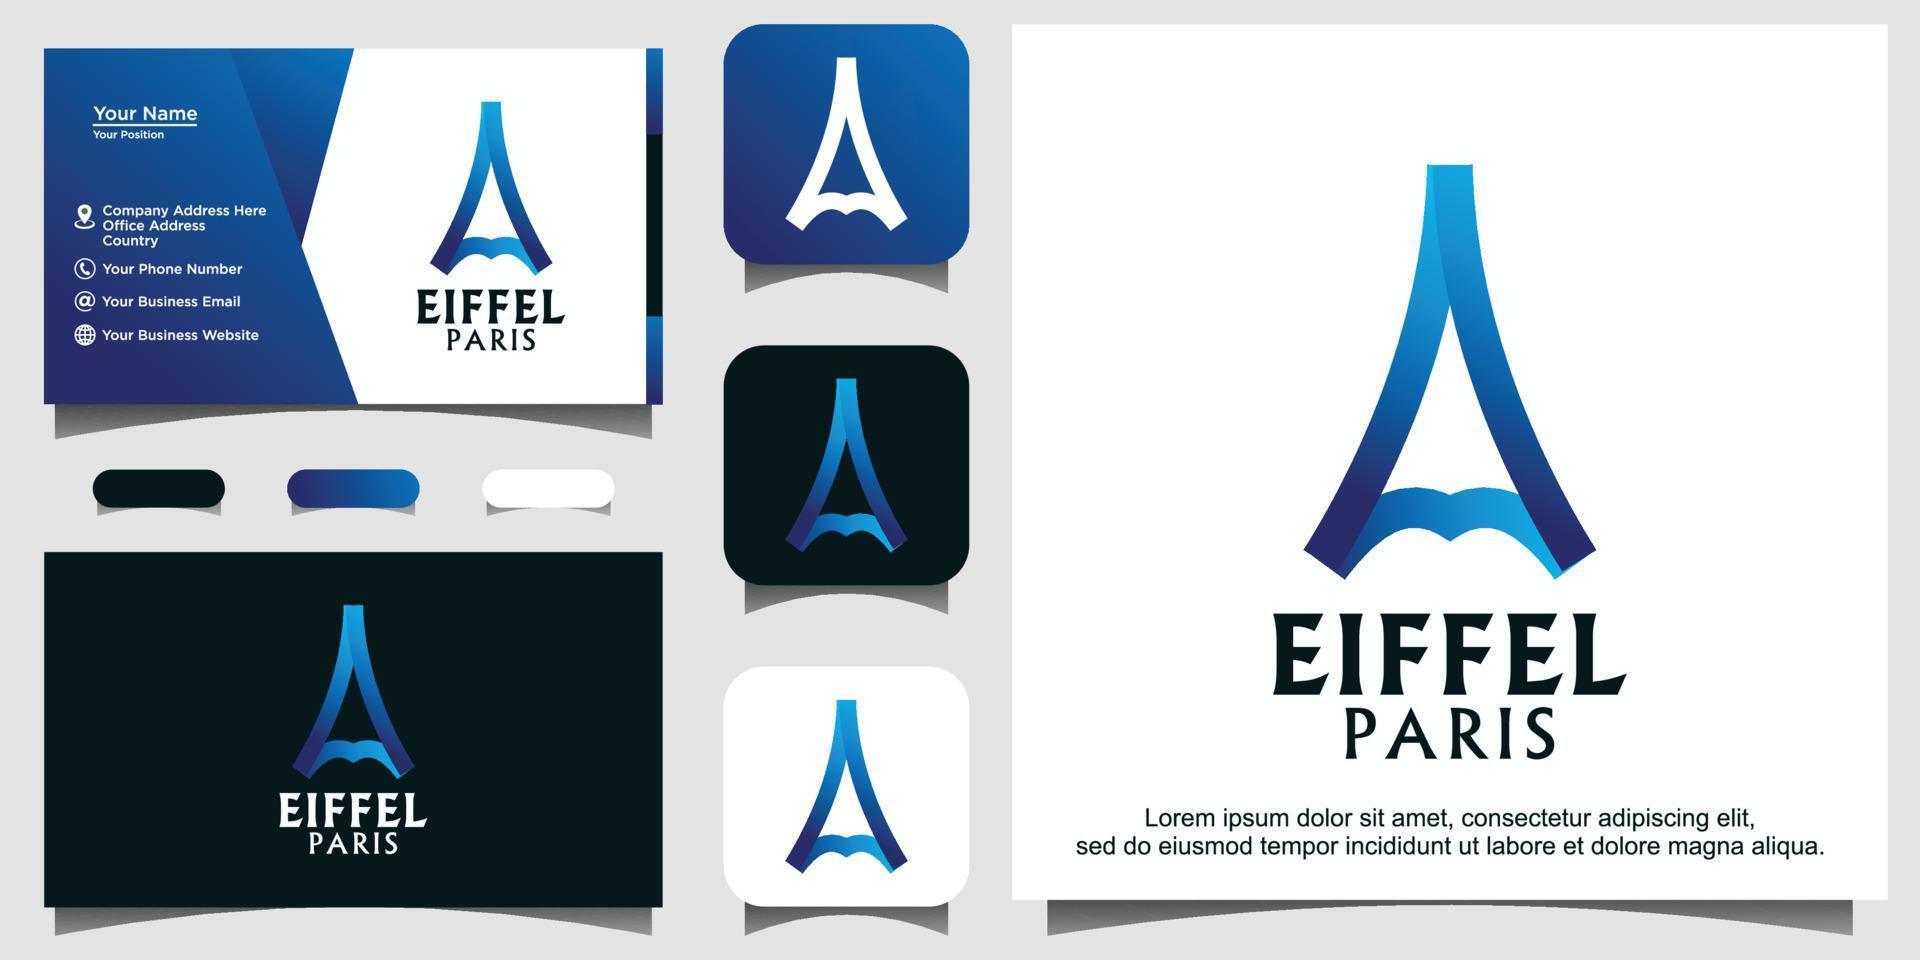 eiffel paris logo design vektor